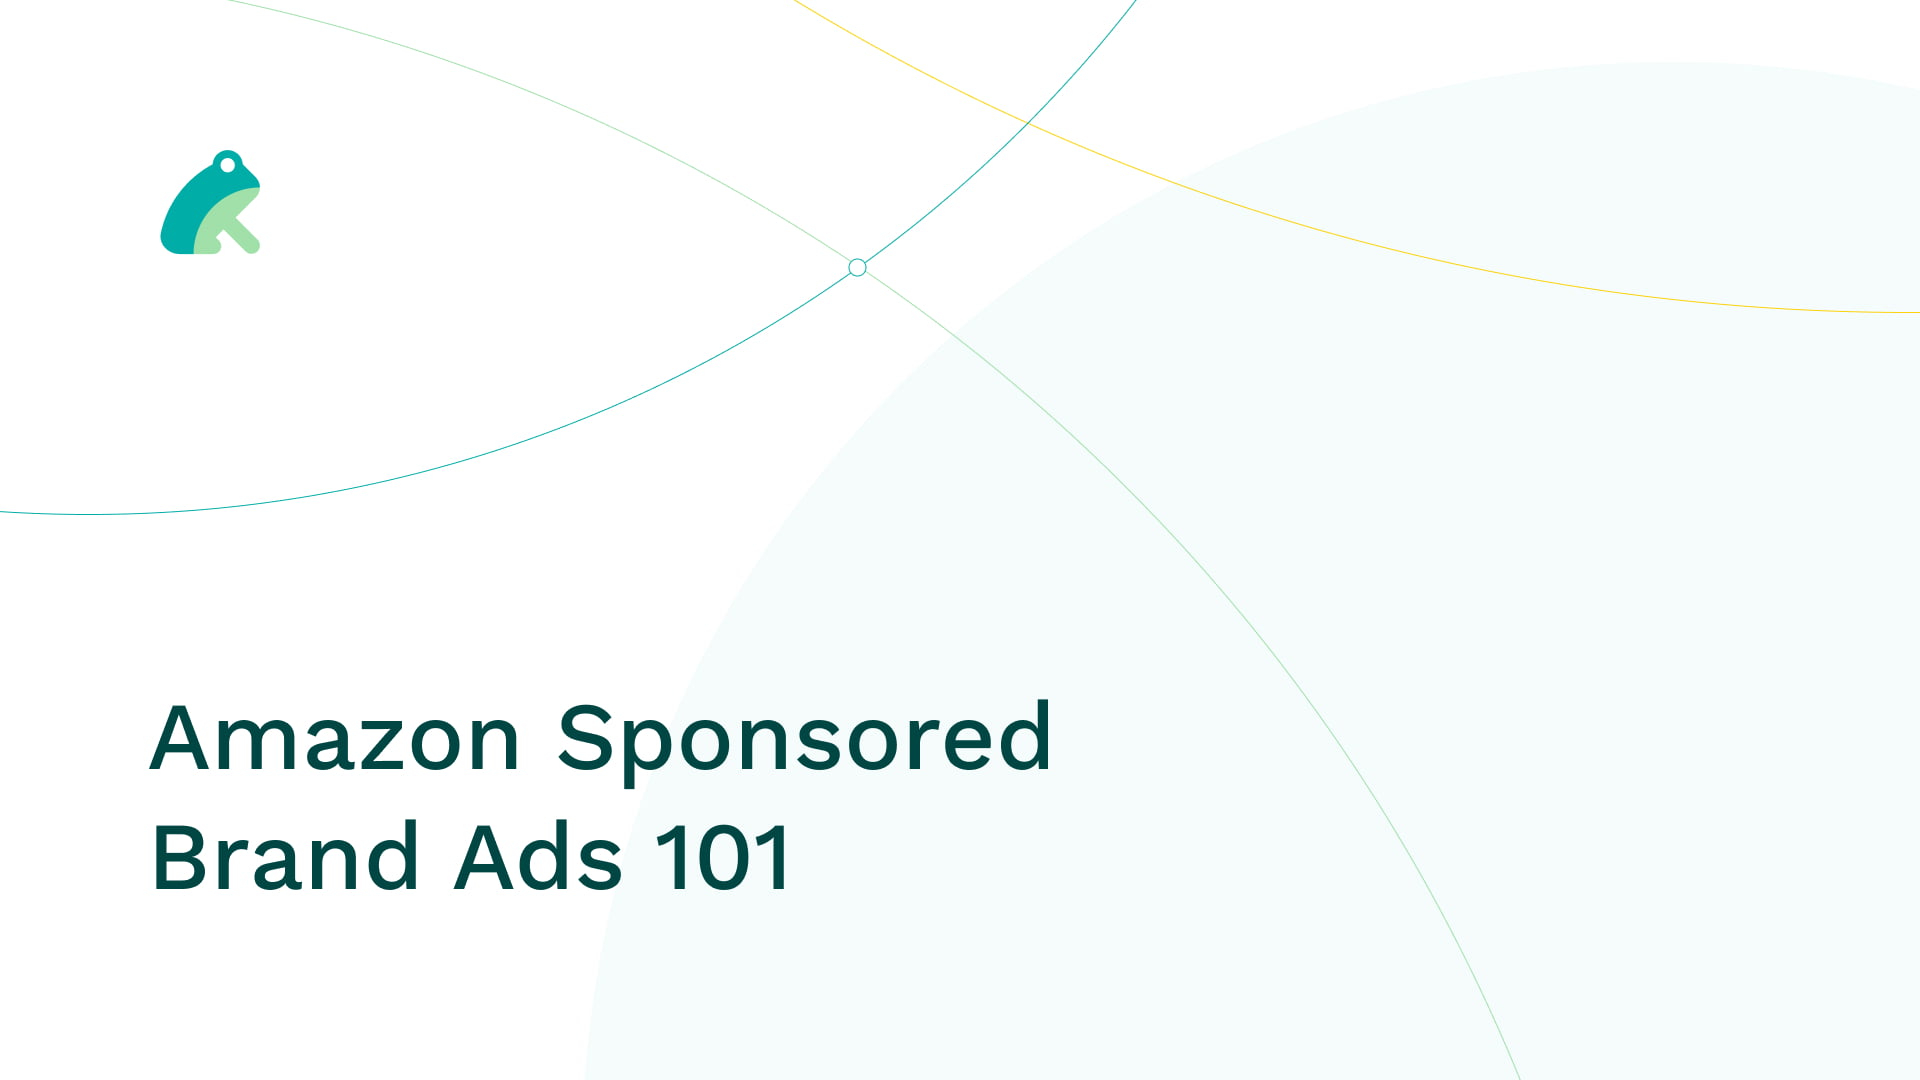 Amazon Sponsored Brand Ads 101